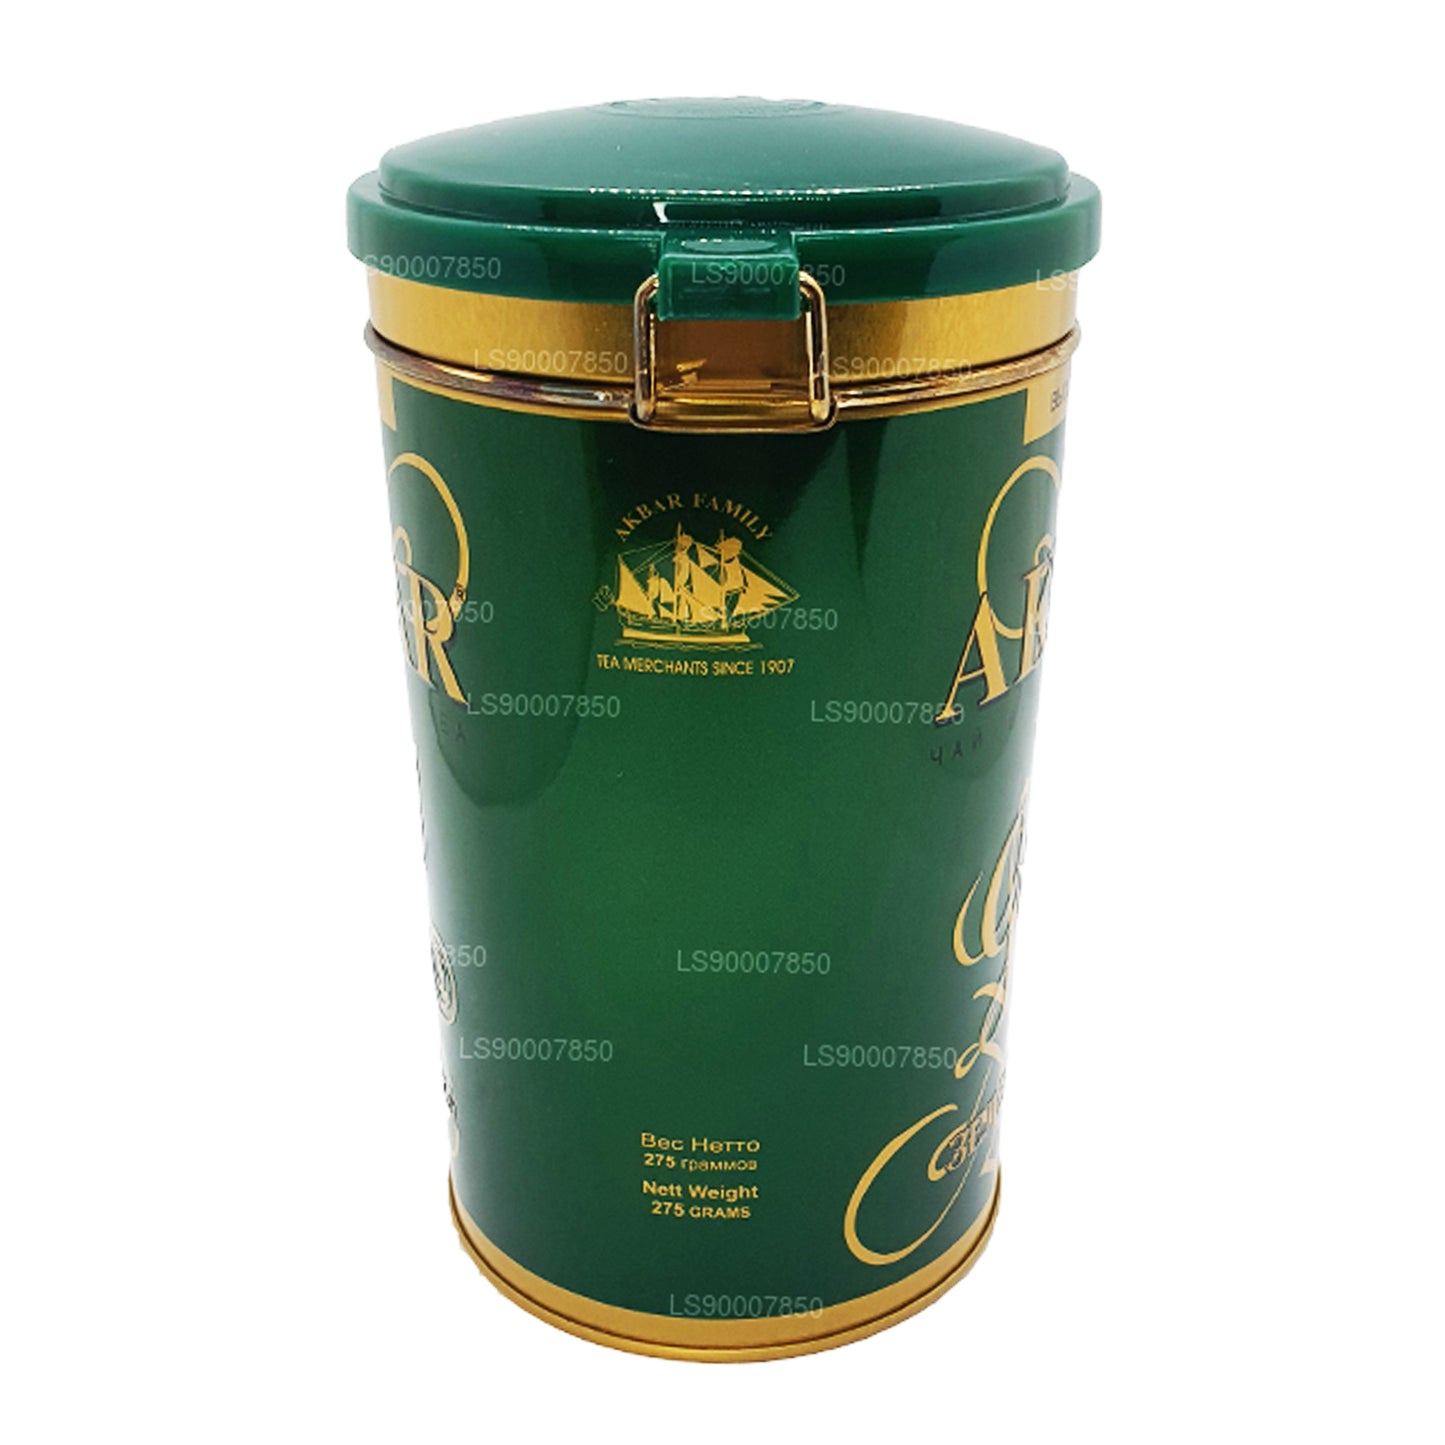 Akbar Gold Green Tea Leaf Tea (275g) Tin